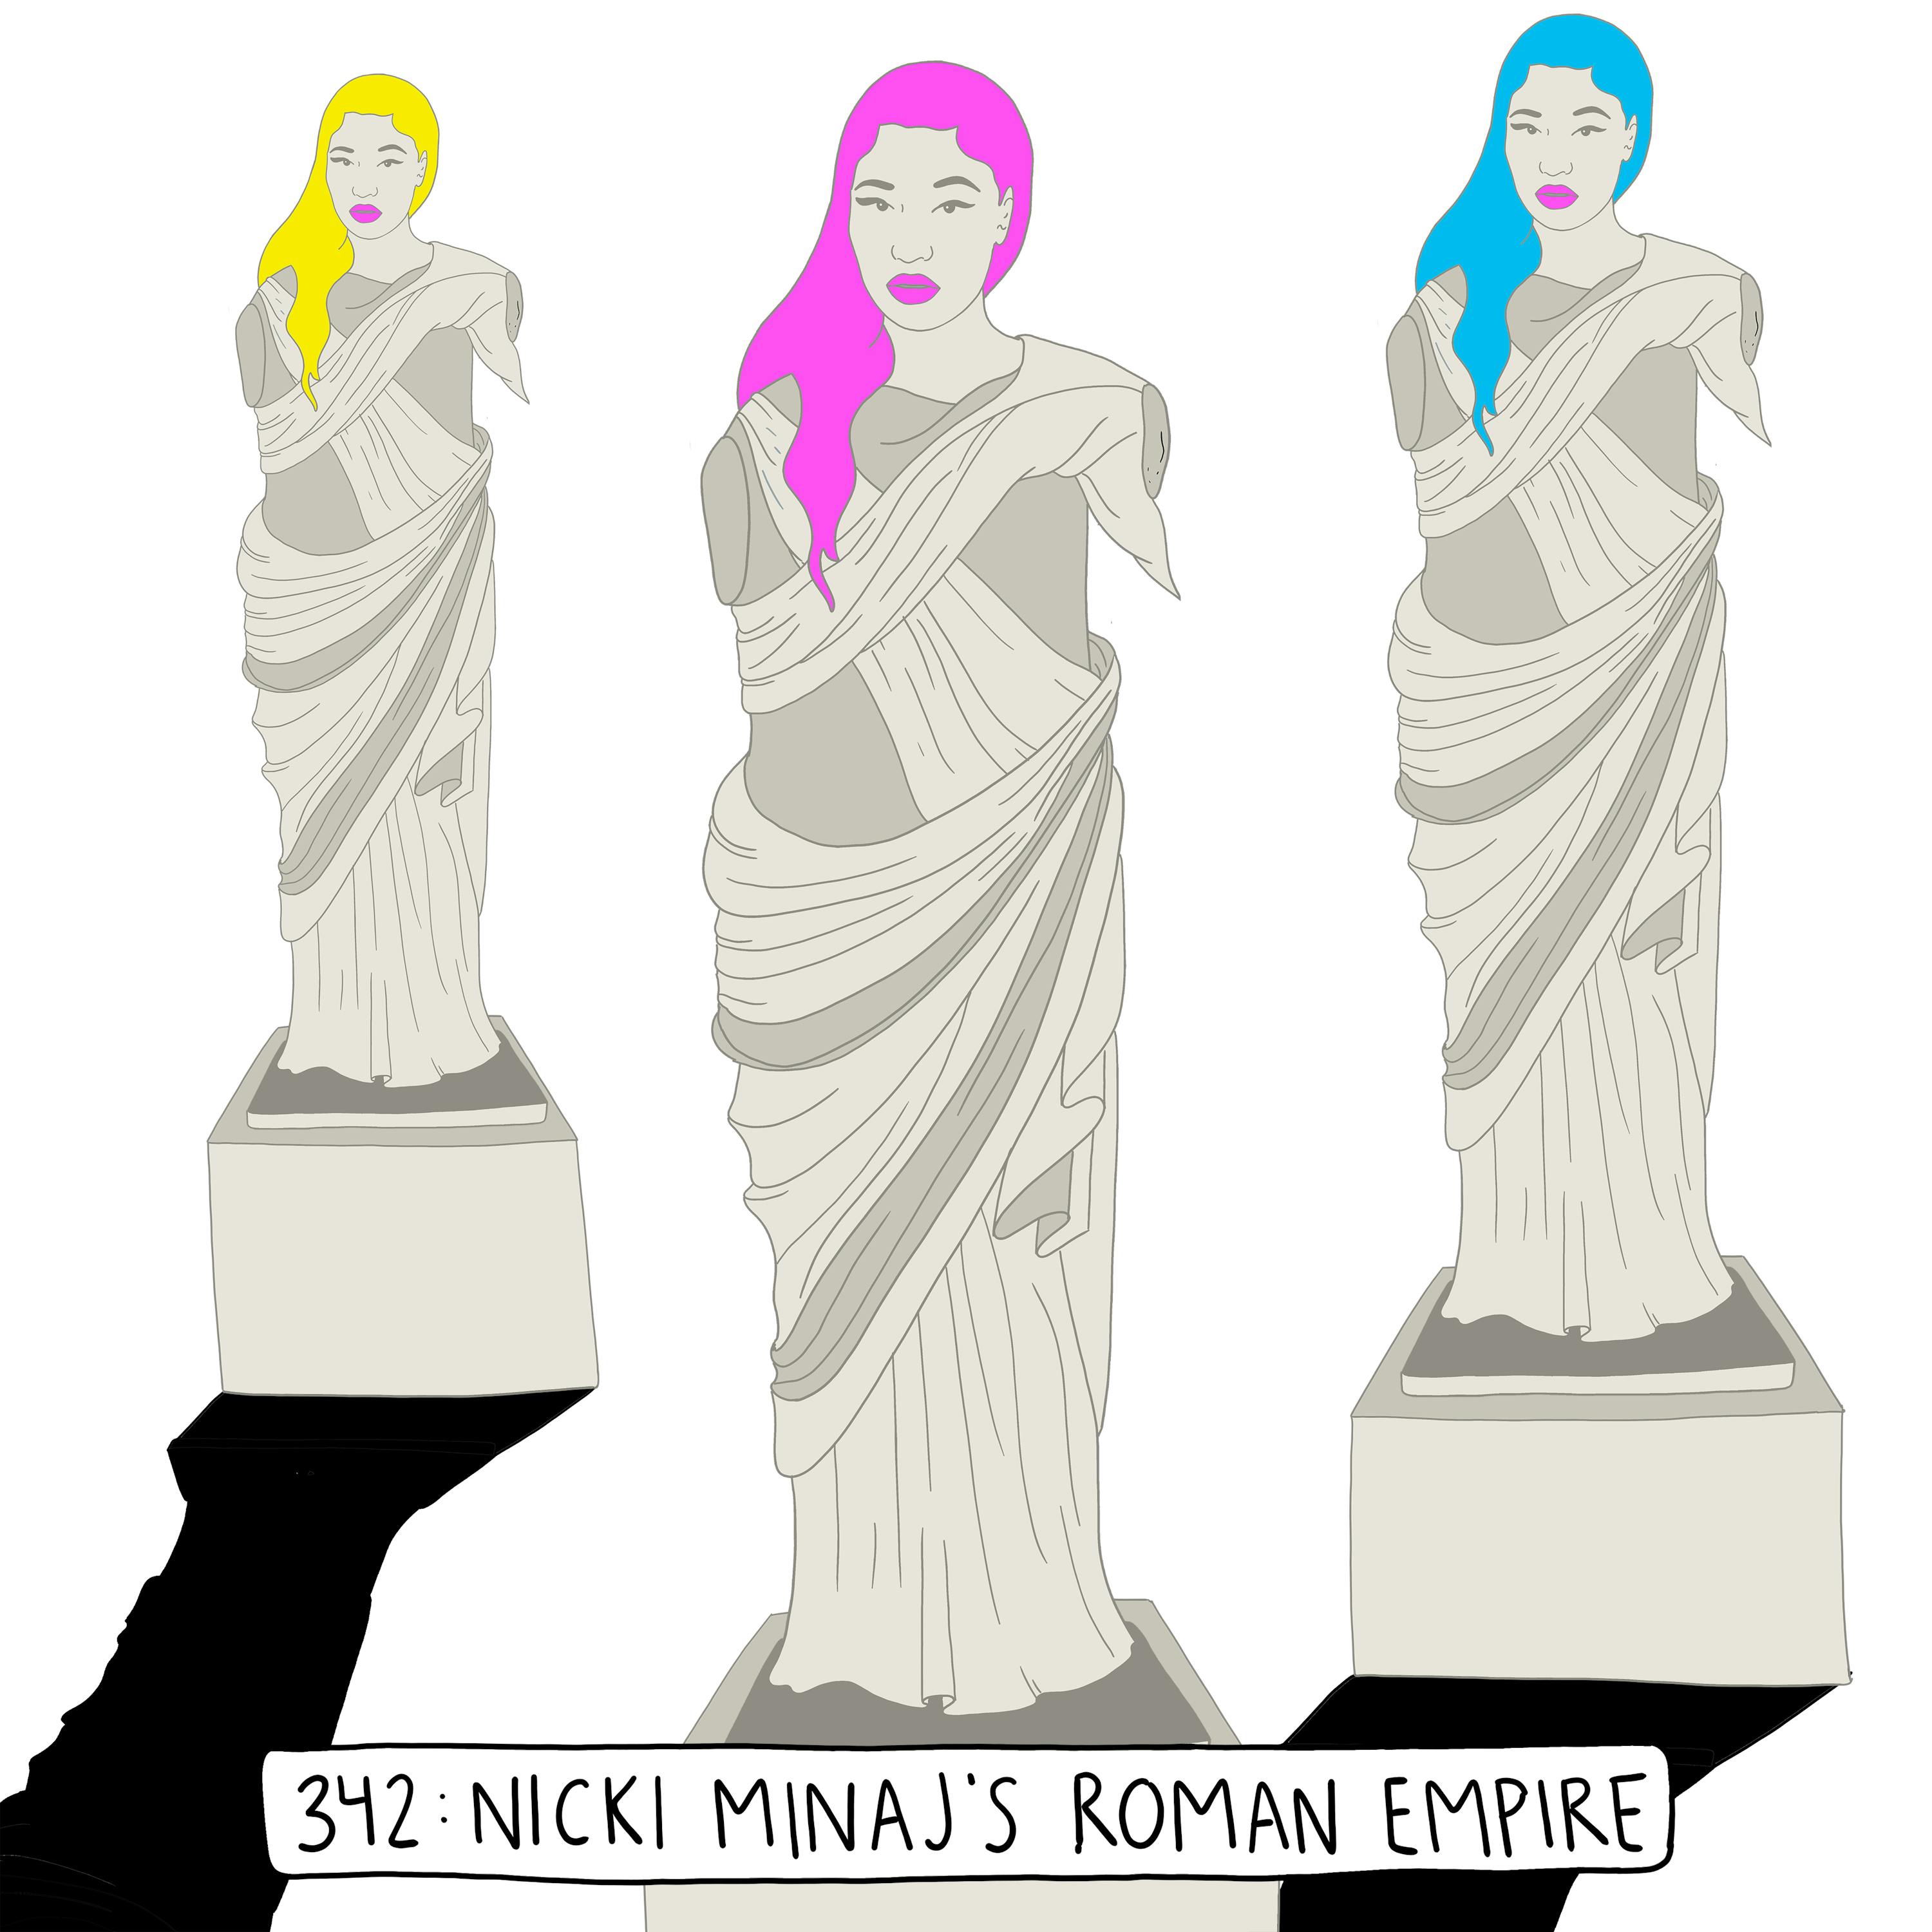 Nicki Minaj’s Roman Empire